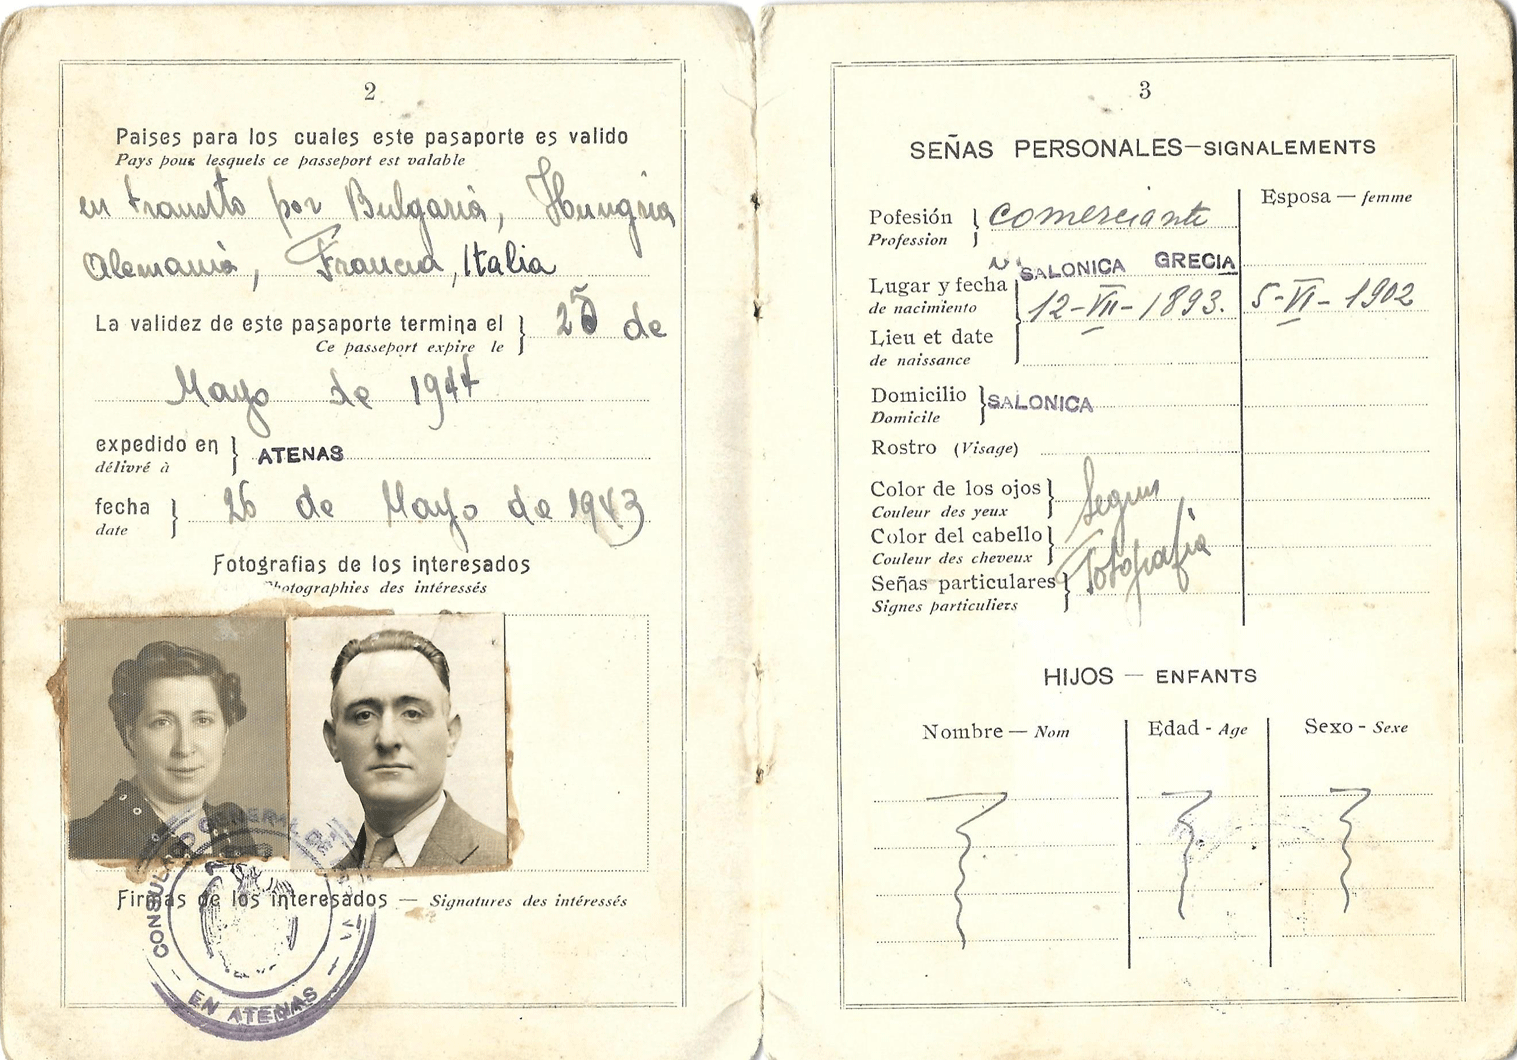 Spanish diplomat Sebastian de Romero life-saving passport.